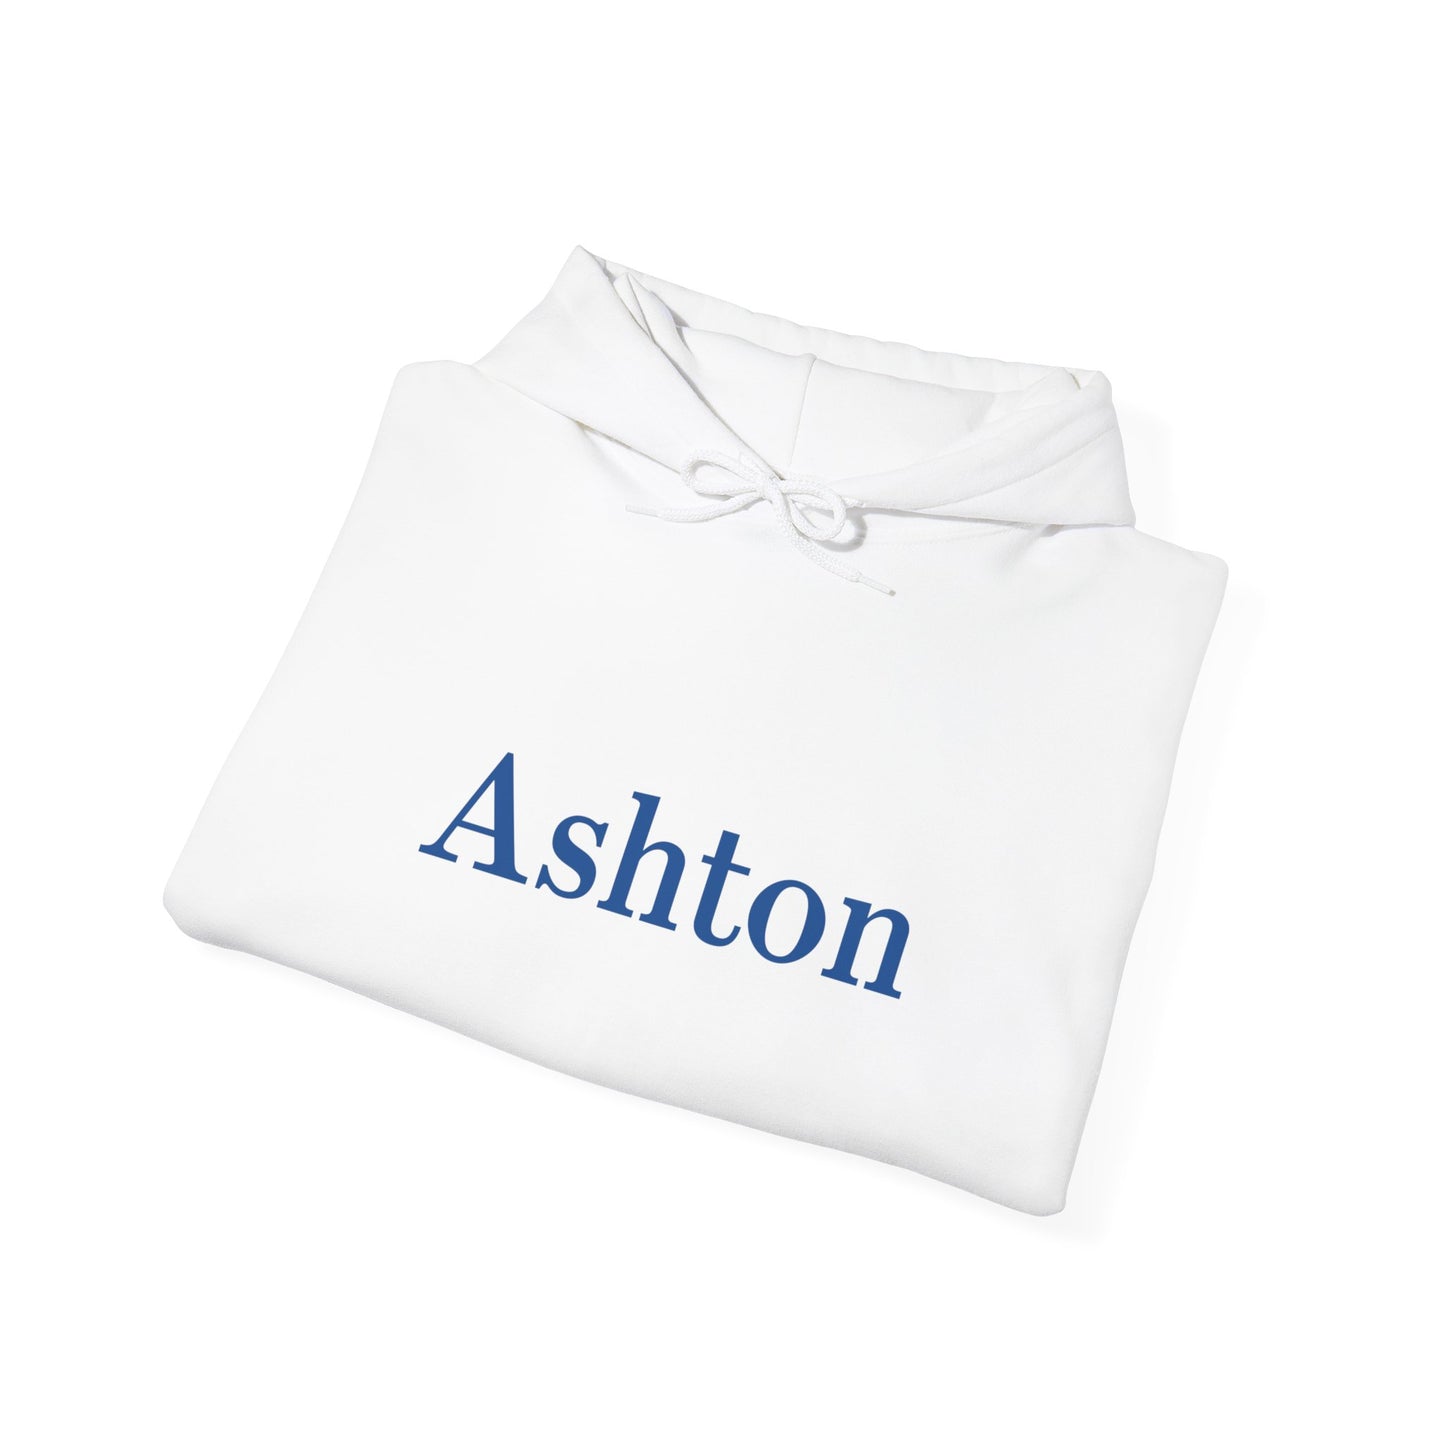 Ashton Unisex Heavy Blend™ Hooded Sweatshirt